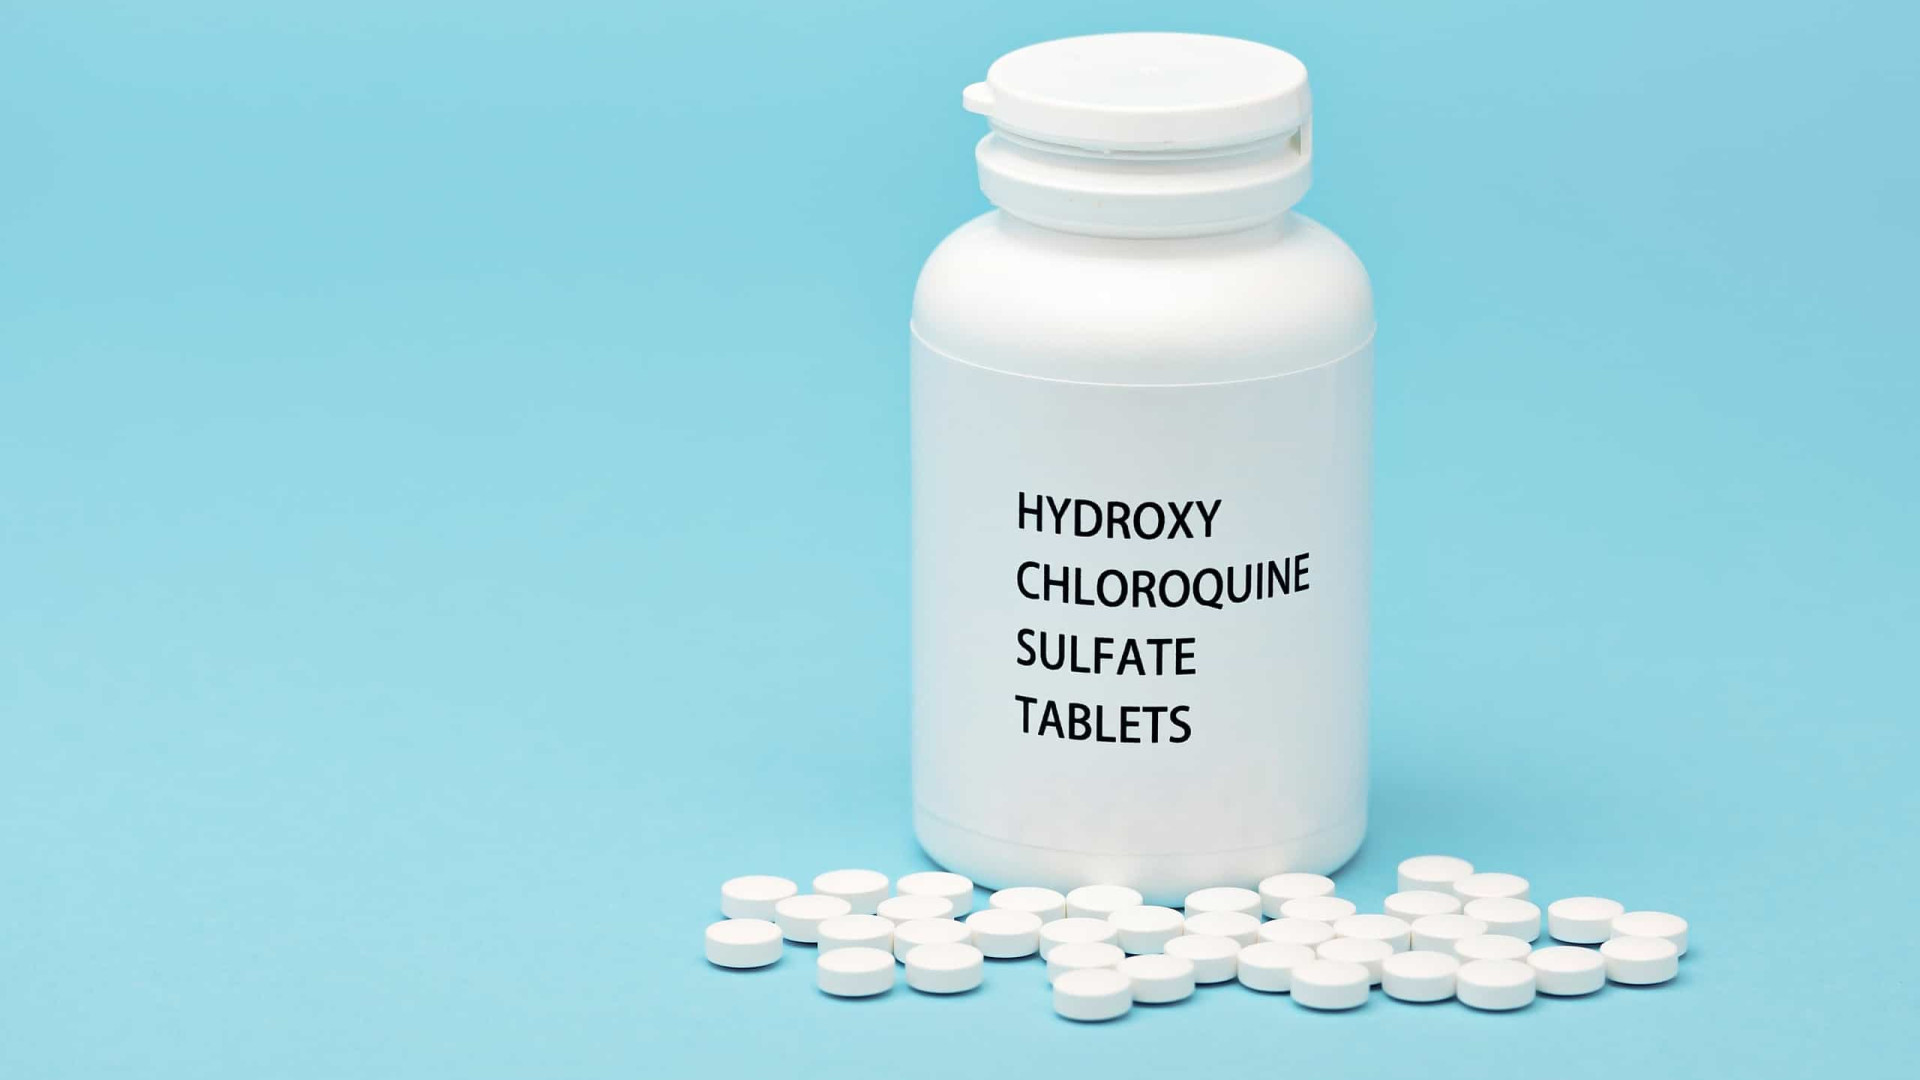 Estudo confirma ineficácia da hidroxicloroquina no tratamento da Covid-19